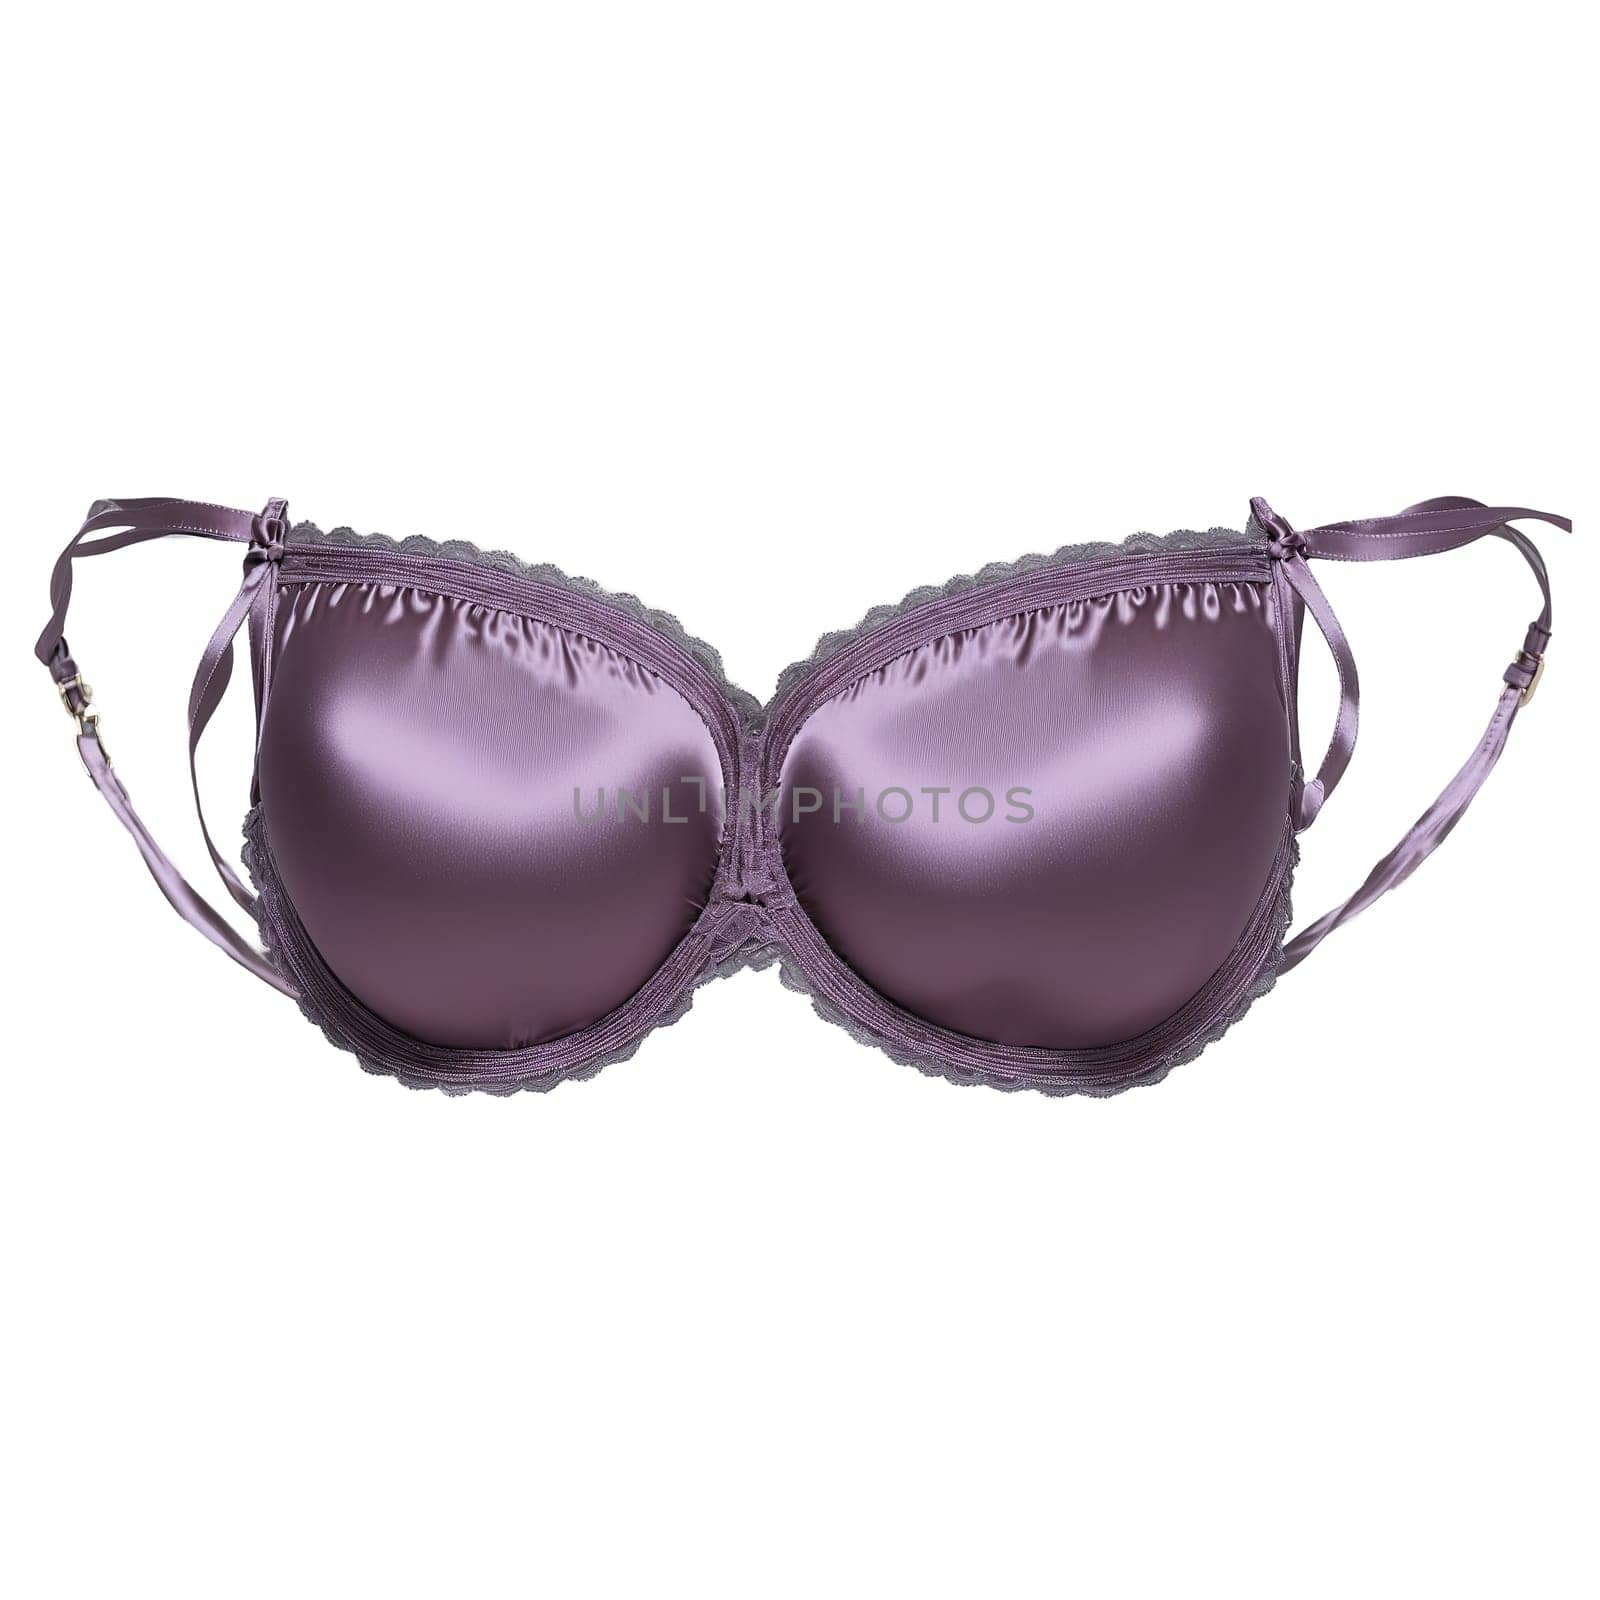 Romantic Mauve Satin Bra A romantic mauve satin bra with a soft feminine color showcasing by panophotograph